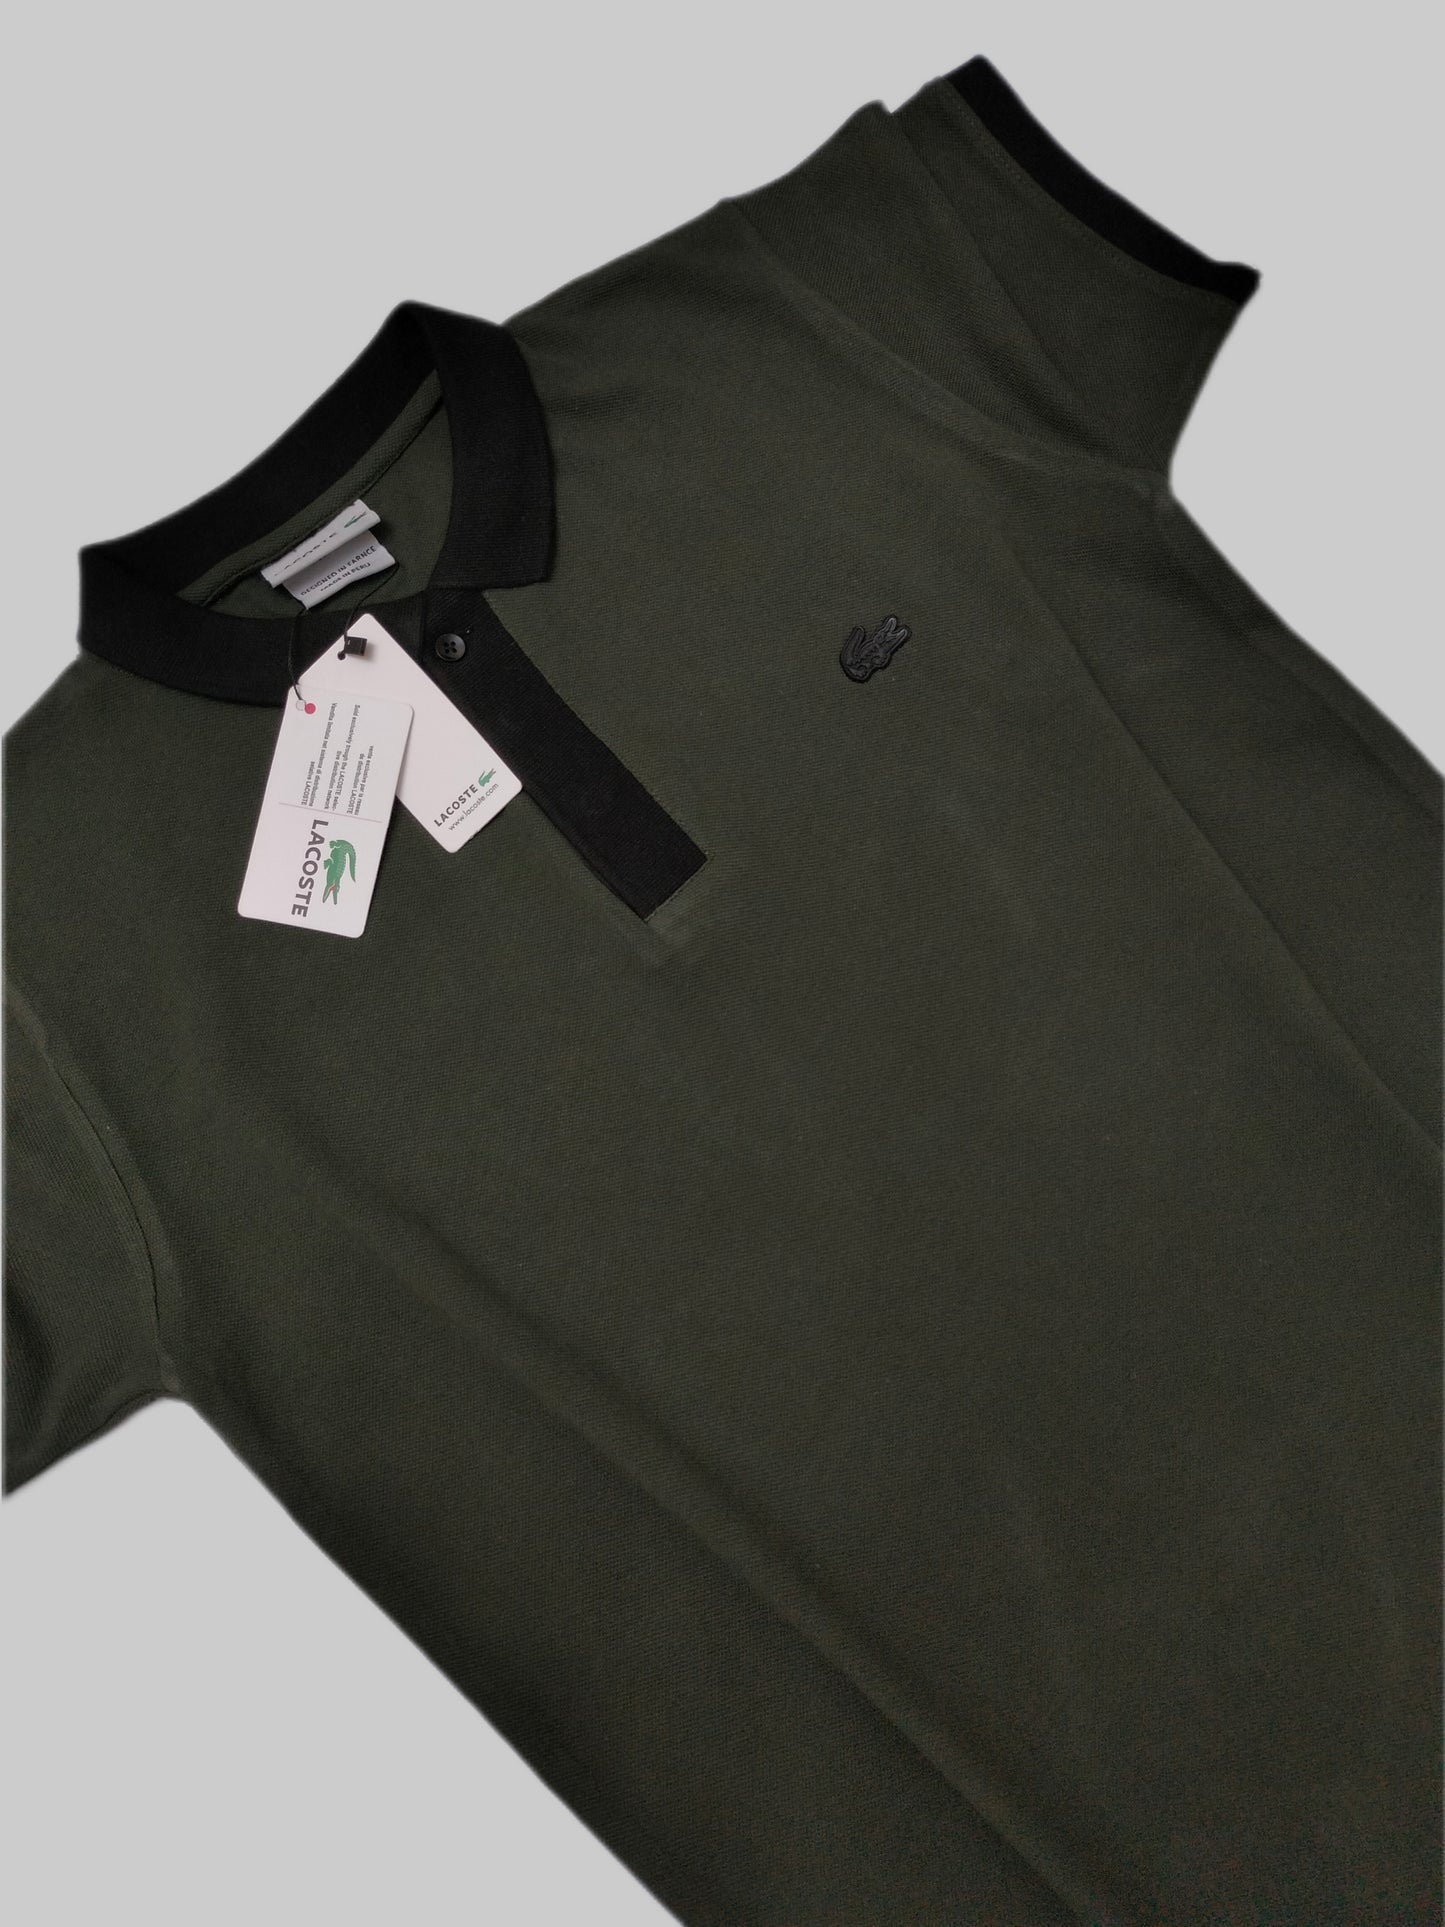 Lacoste men's polo shirt with Rubber Logo